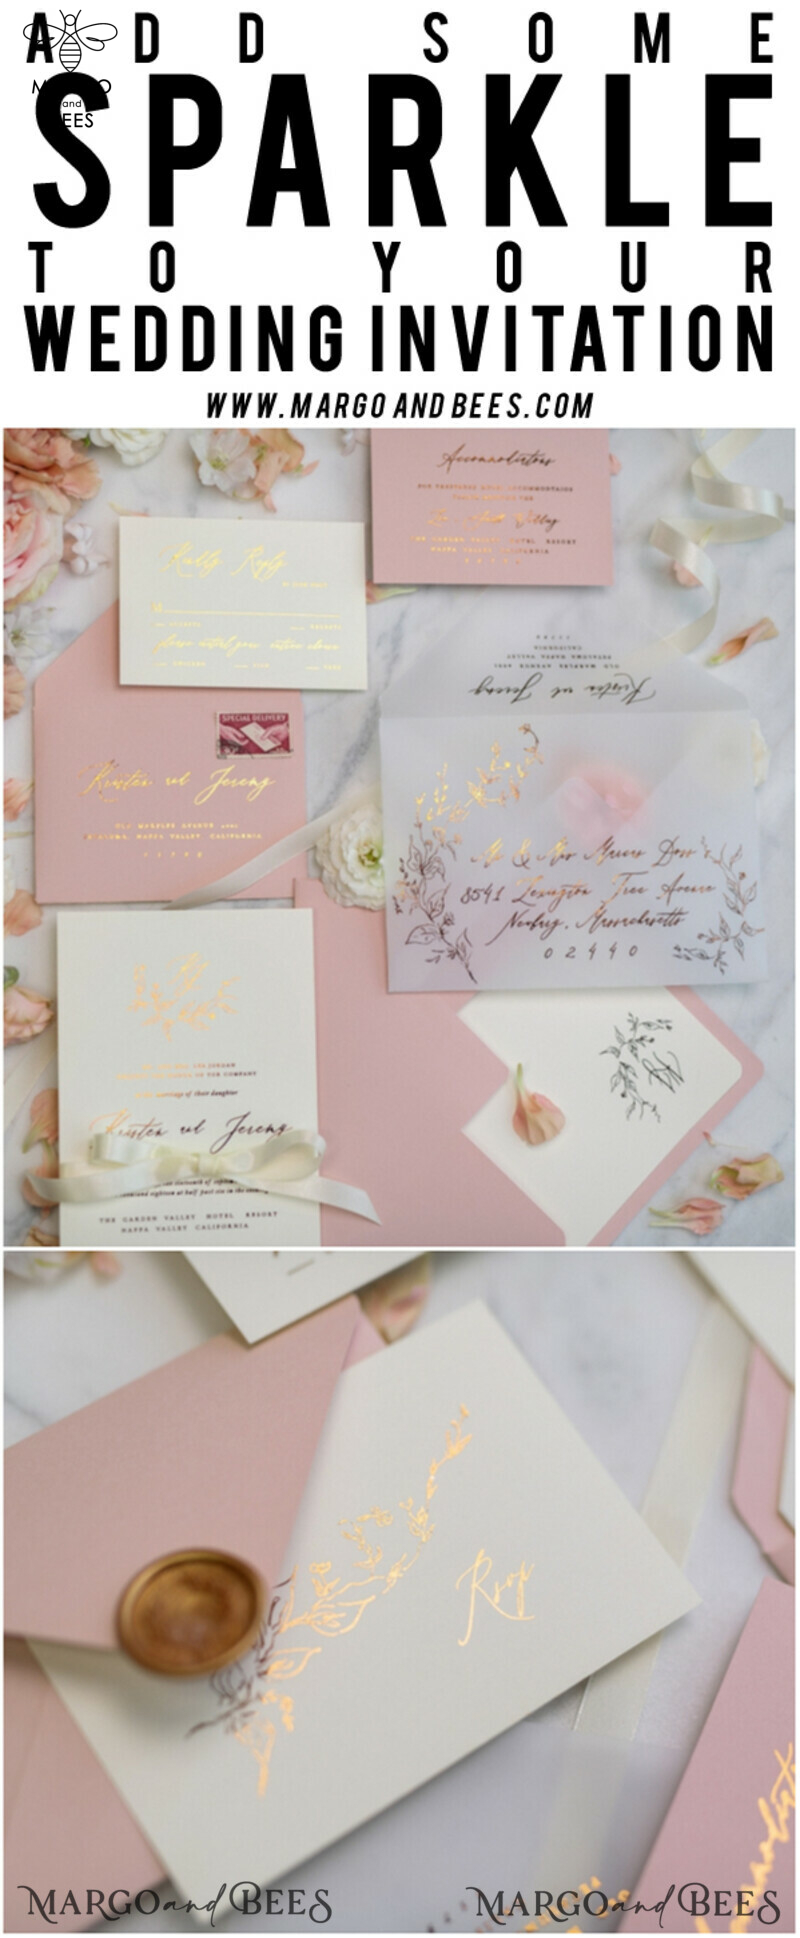 Bespoke Vellum Wedding Invitation Suite: Romantic Blush Pink and Glamour Gold Foil for an Elegant Golden Affair-35